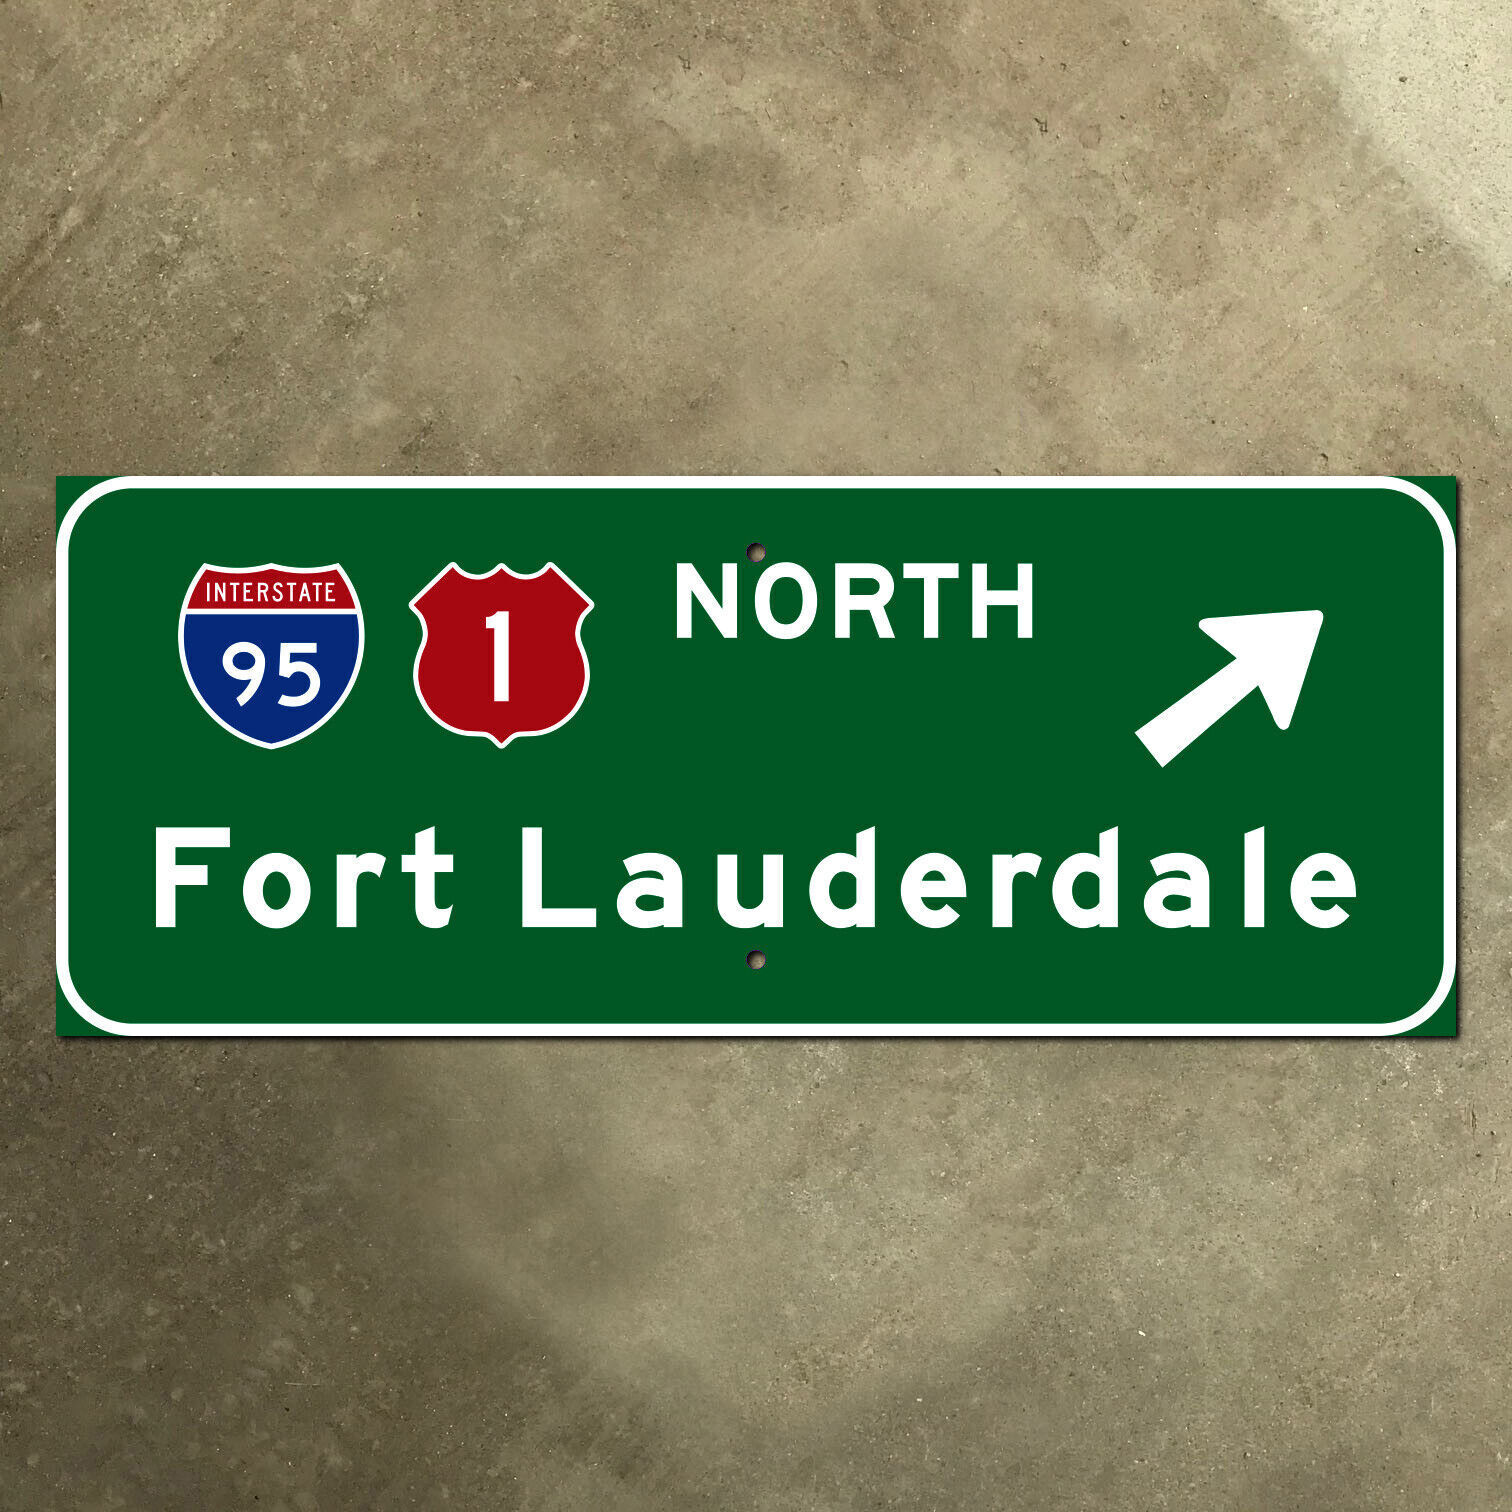 Florida interstate 95 US 1 Fort Lauderdale highway road guide sign 1957 Ft 18x7